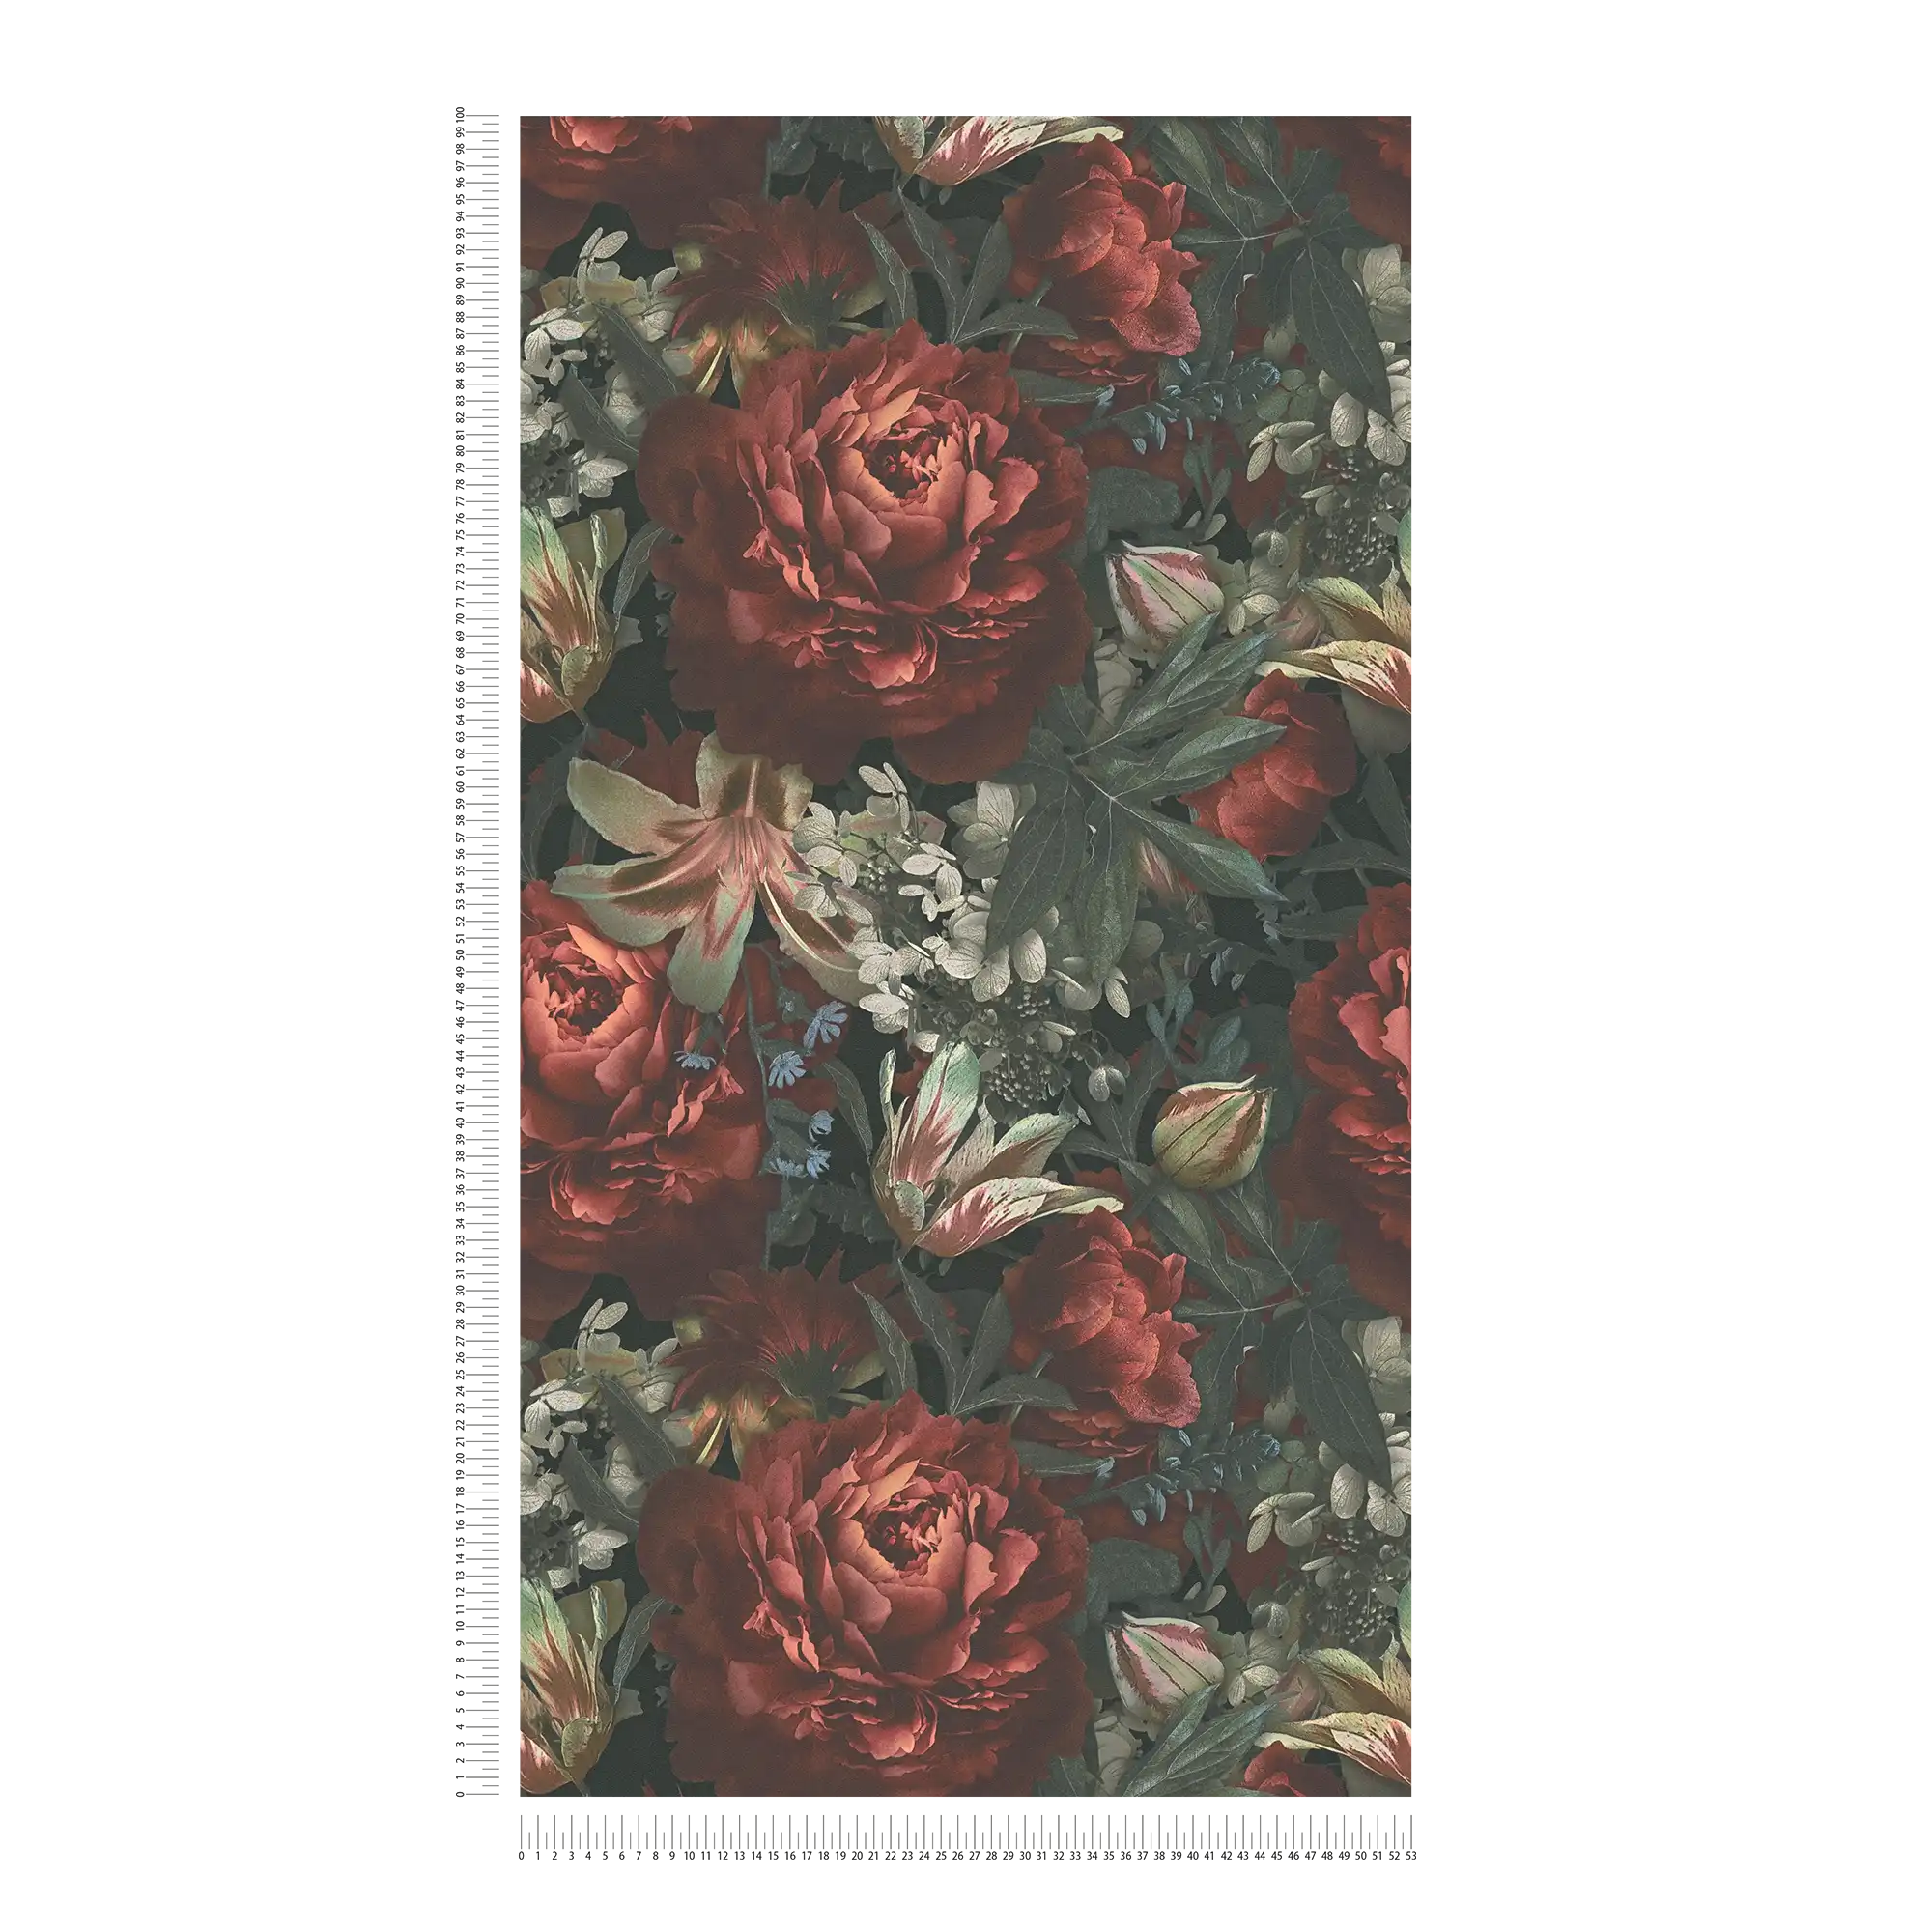             Blumentapete Rosen & Tulpen vintage Stil – Grün, Rot, Creme
        